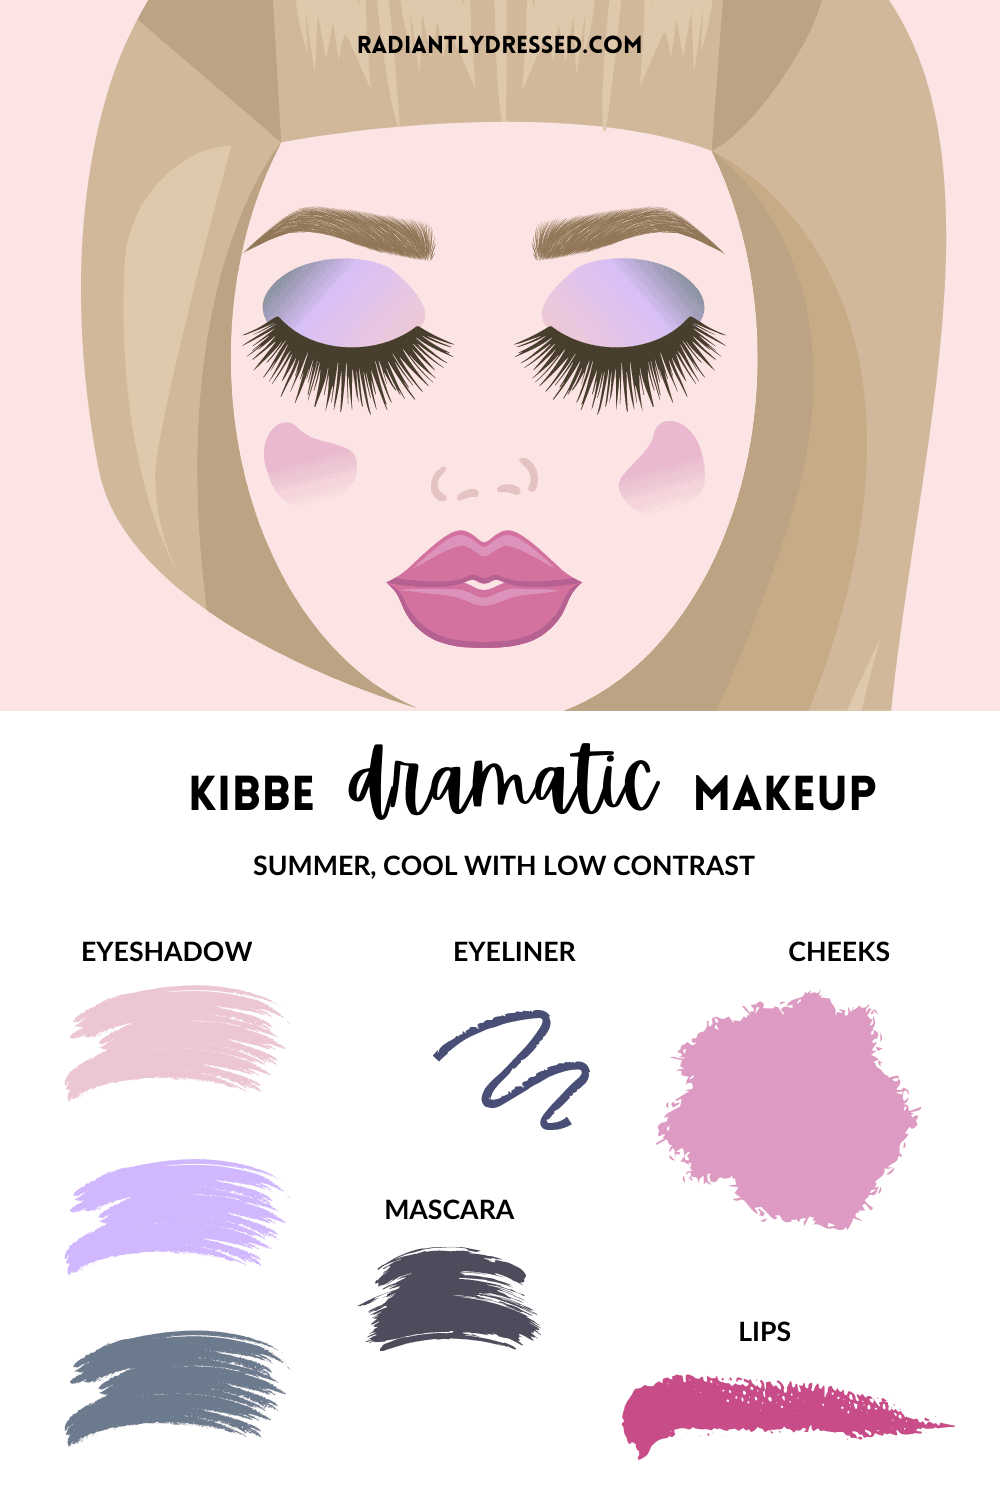 Kibbbe Dramatic Makeup for Summer Color Season